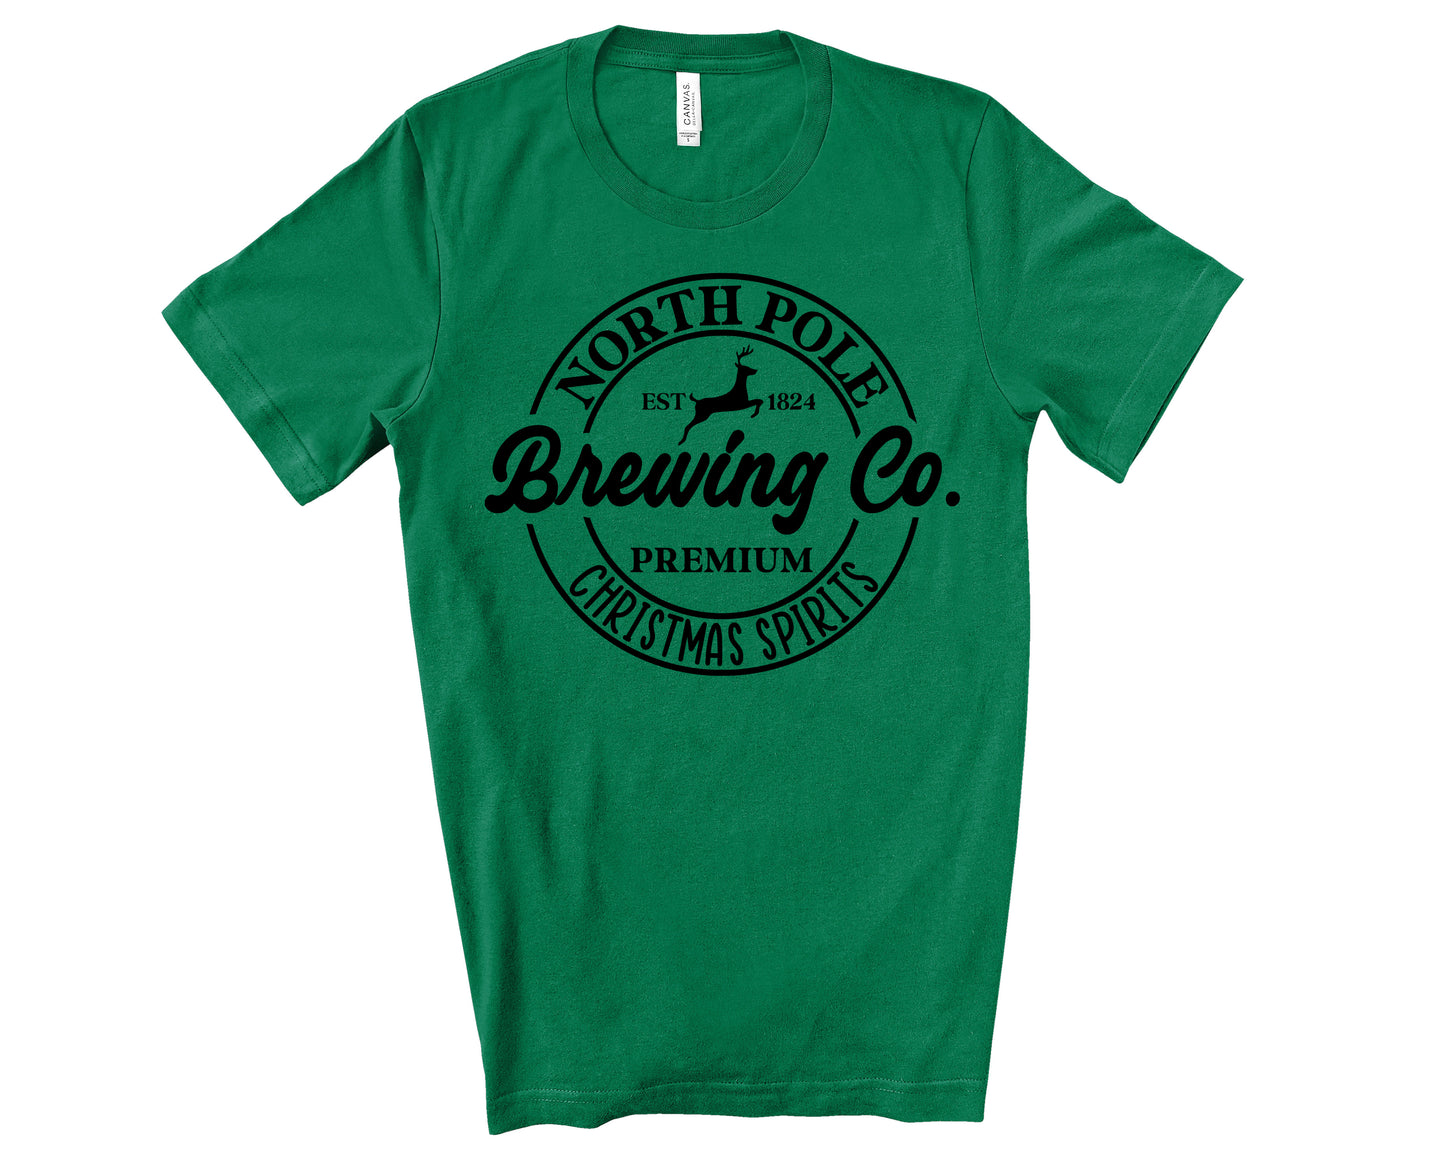 North Pole Brewing Company T-shirt